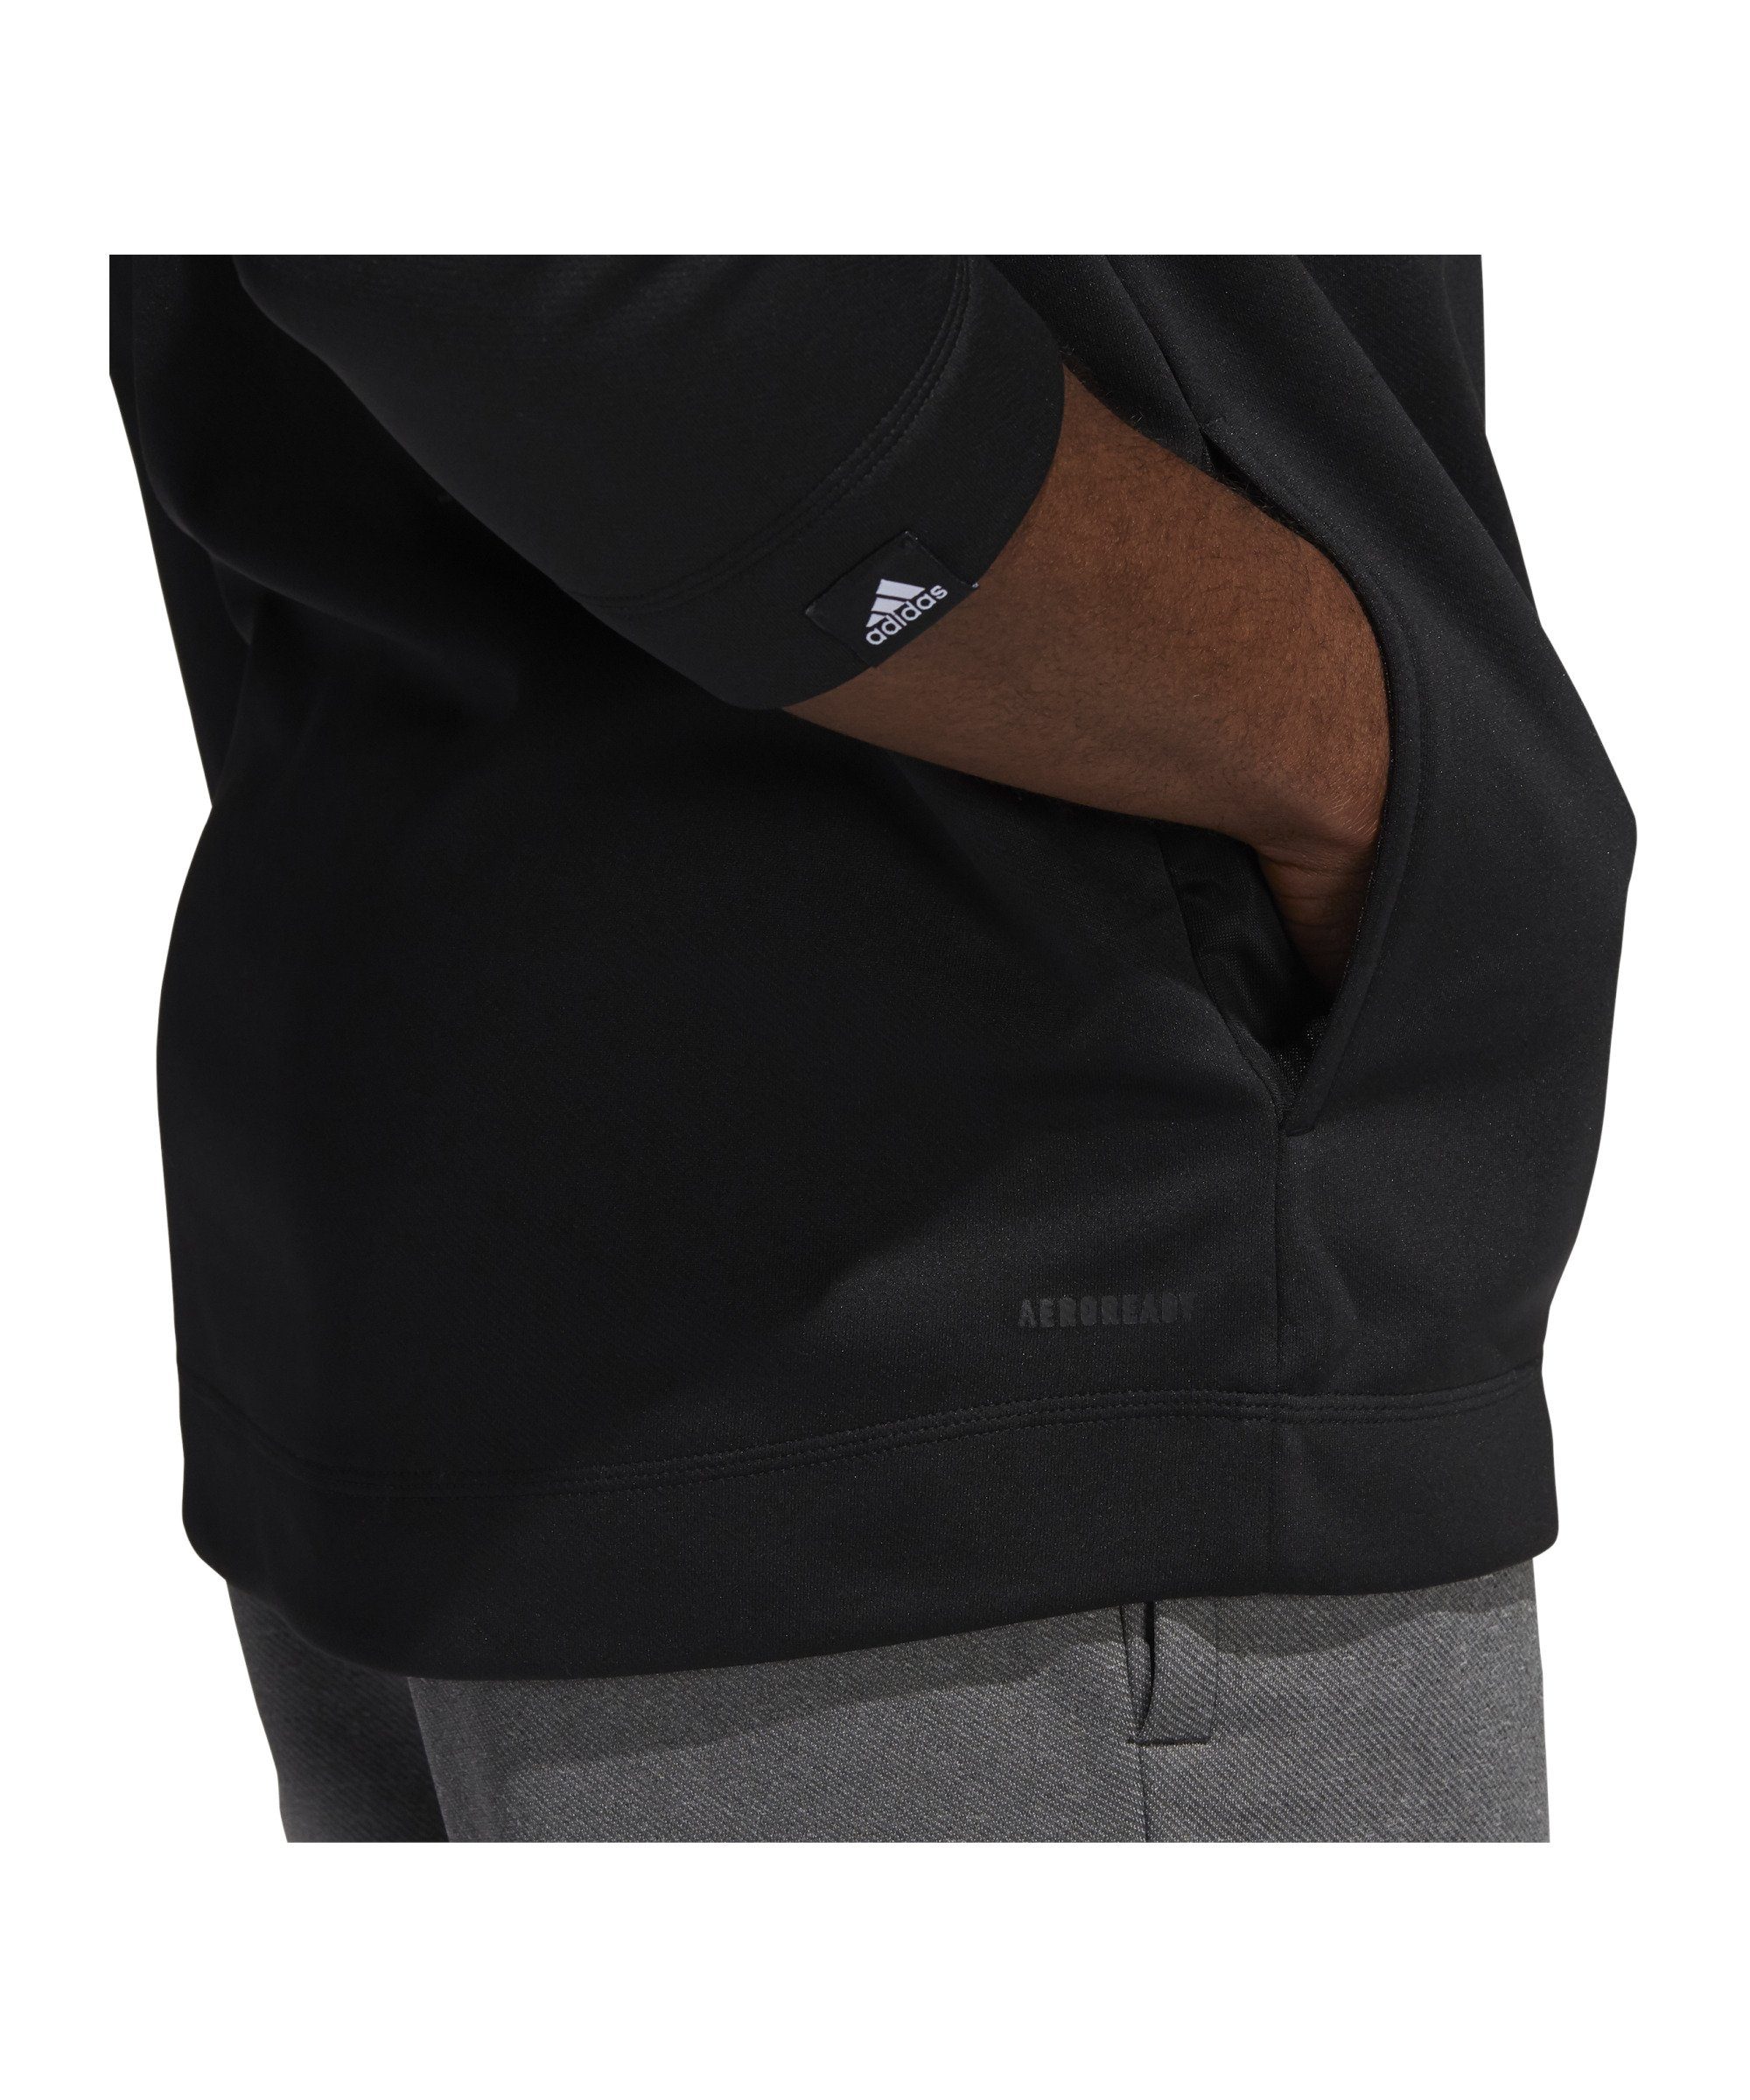 adidas Performance Sweatshirt HalfZip Sweatshirt schwarzweiss